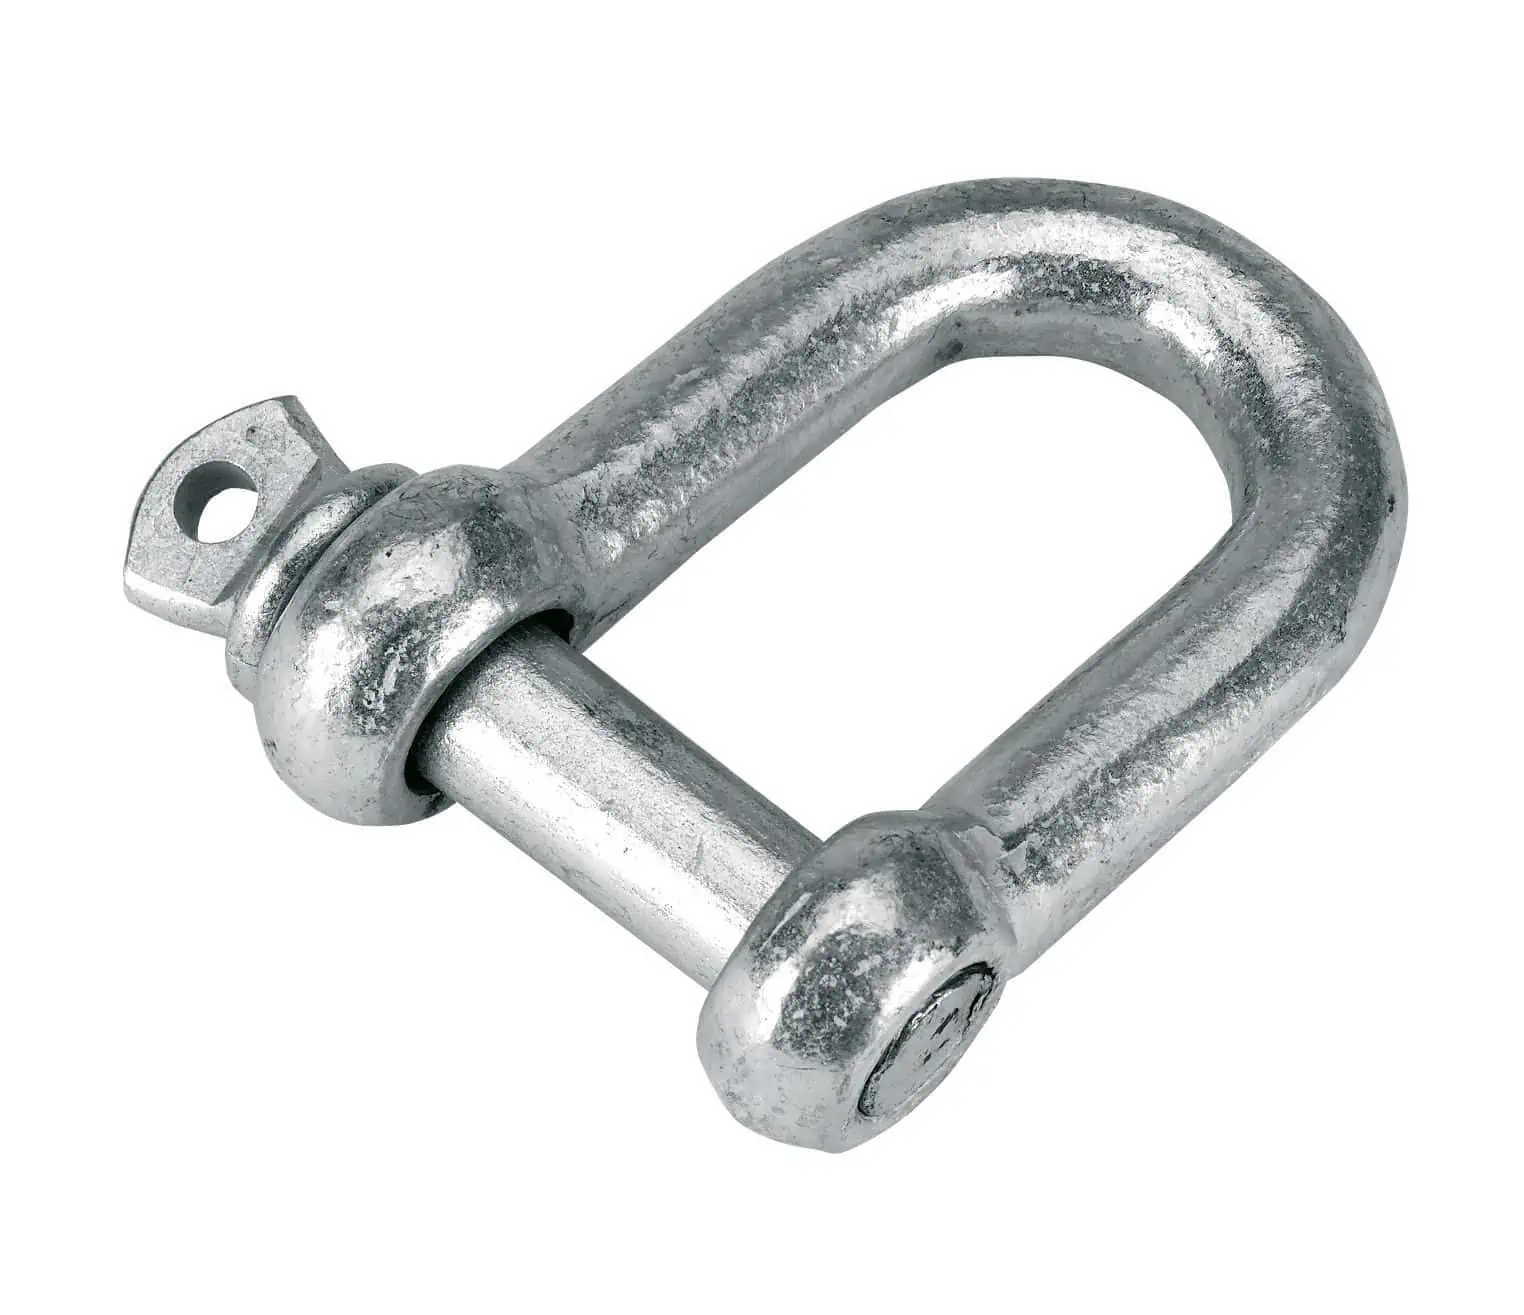 Chain shackles straight galvanized 3 pcs.